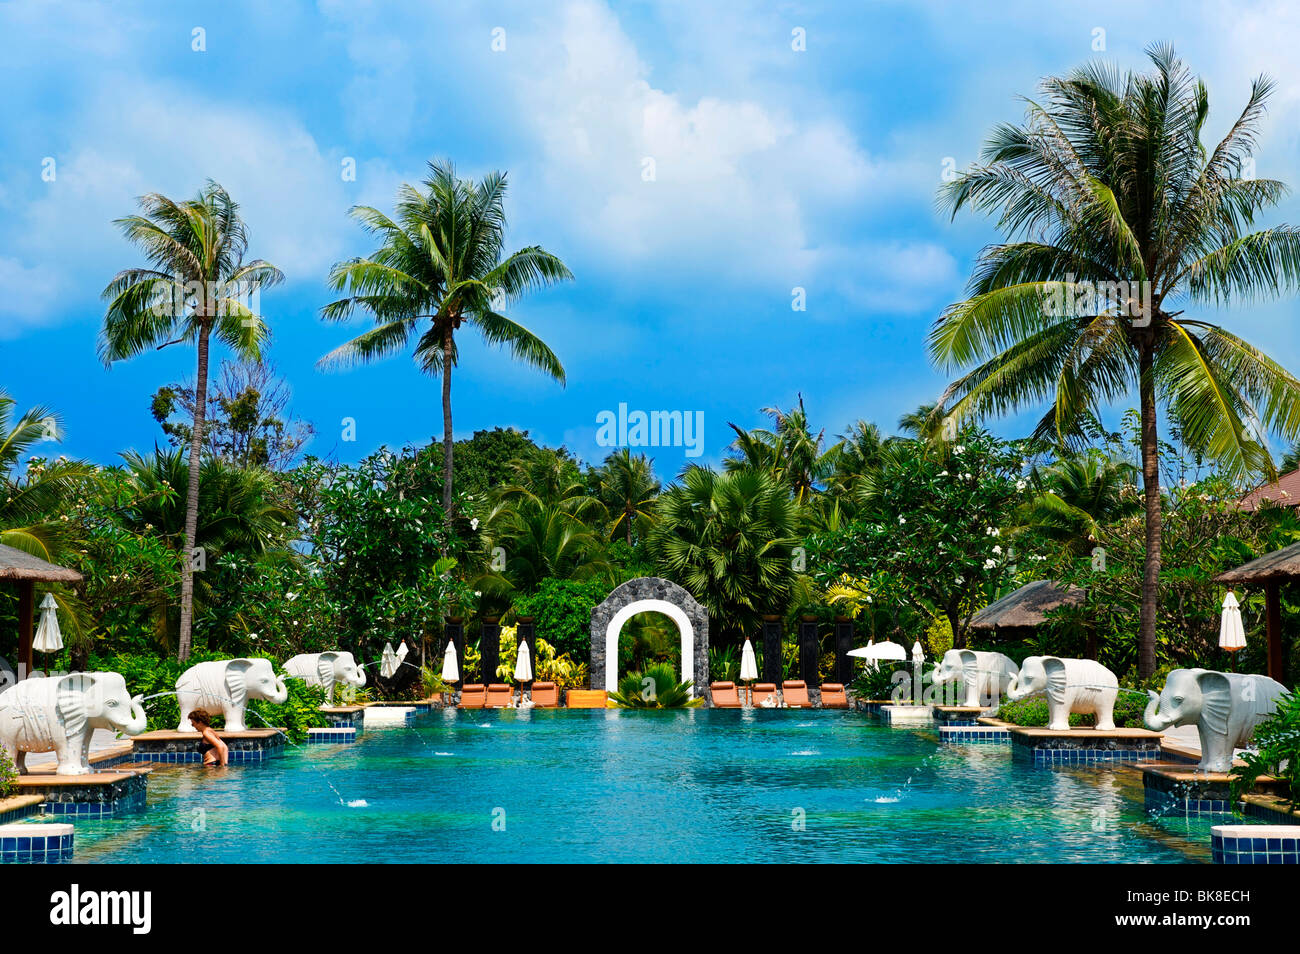 Bandara Resort at Mae Nam Beach, Ko Samui island, Thailand, Asia Stock Photo